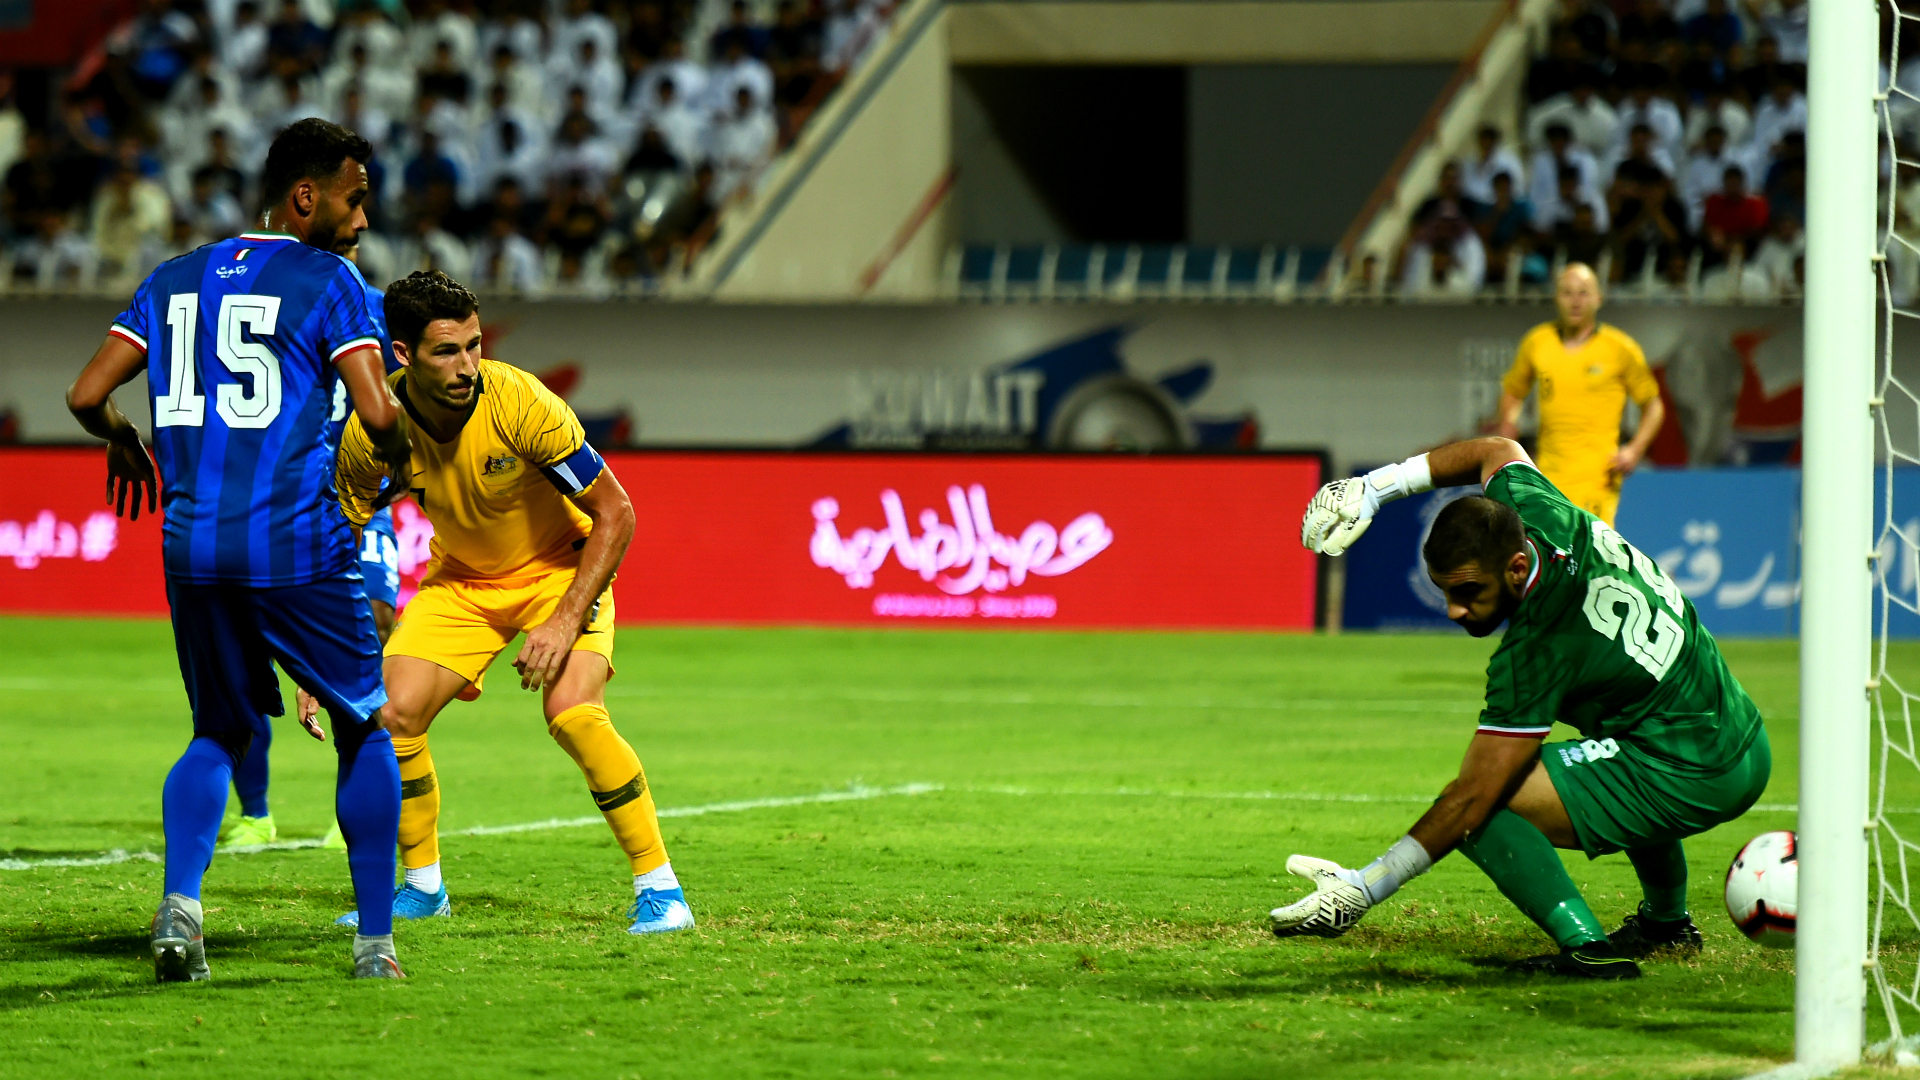 Kuwait 0-3 Australia: Socceroos cruise as Leckie grabs double